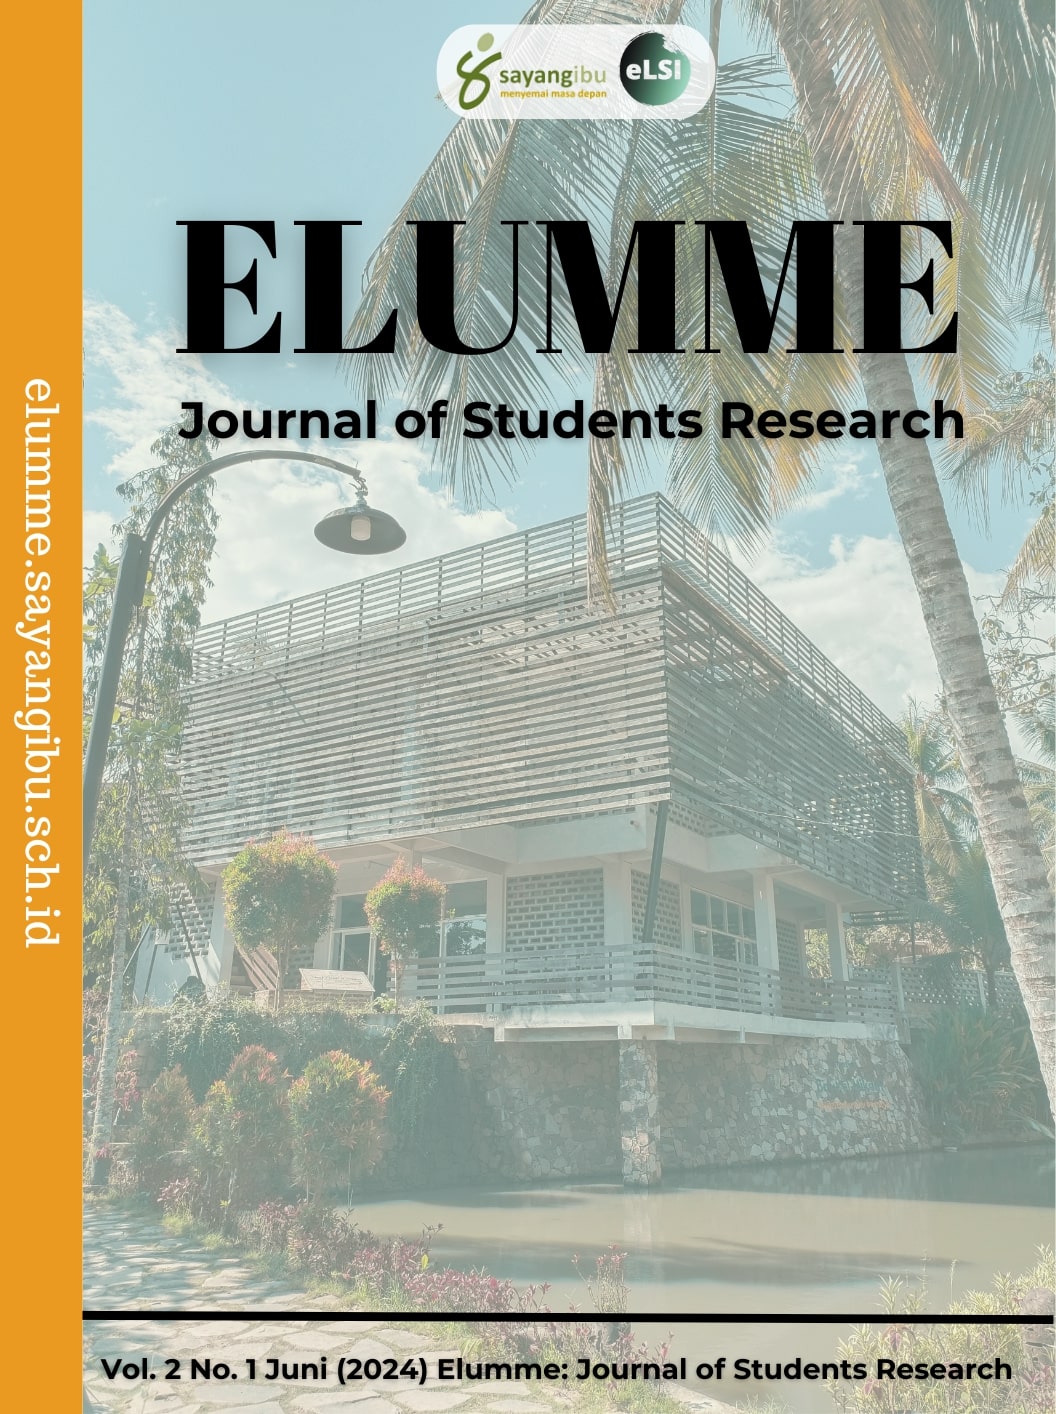 					View Vol. 2 No. 1 (Juni) (2024): Elumme: Journal of Students Research
				